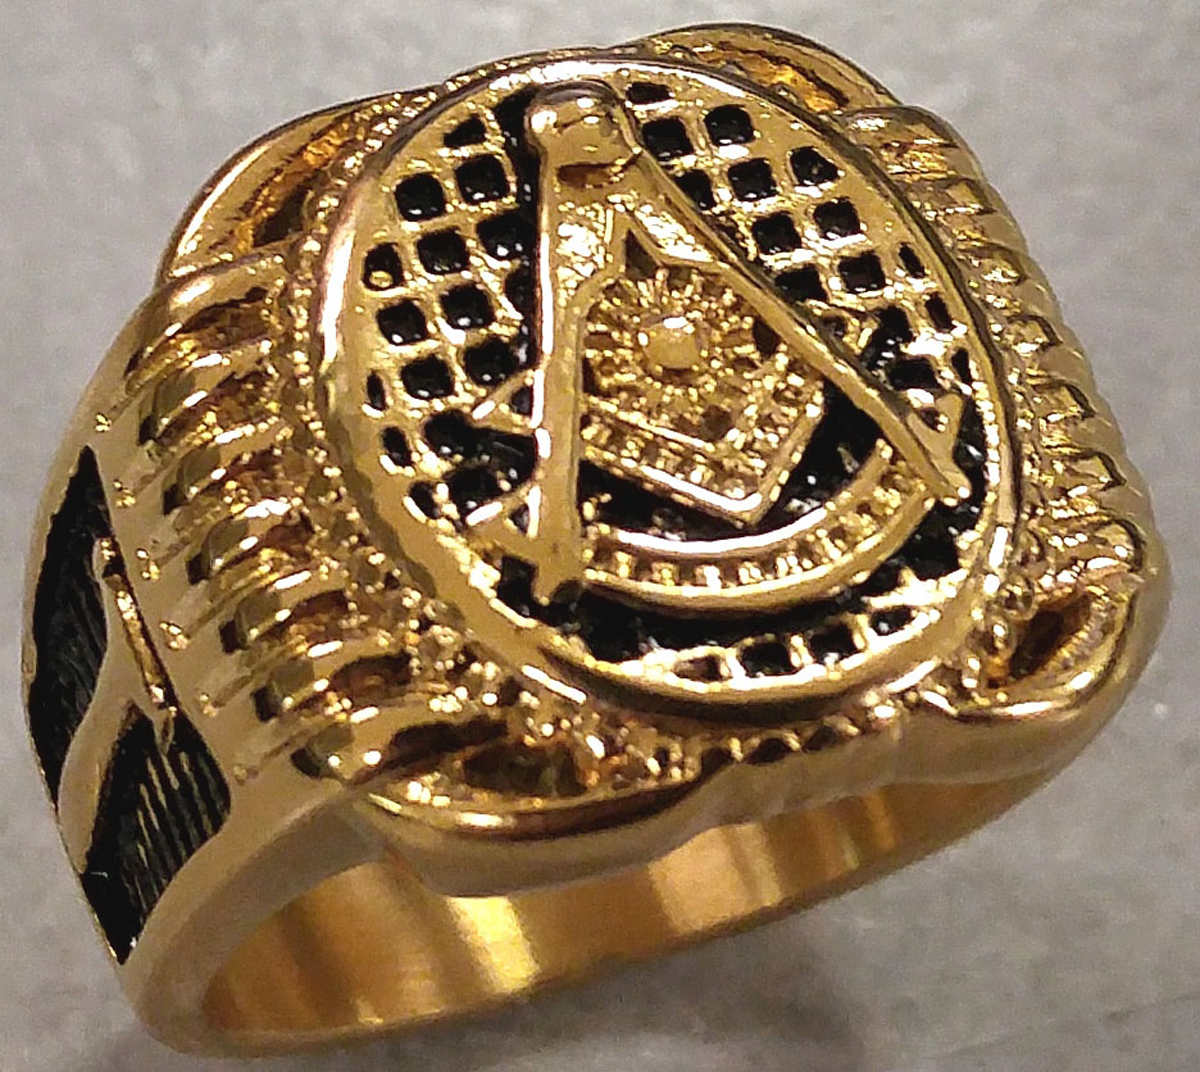 Stainless Steel Masonic Ring Black Finish